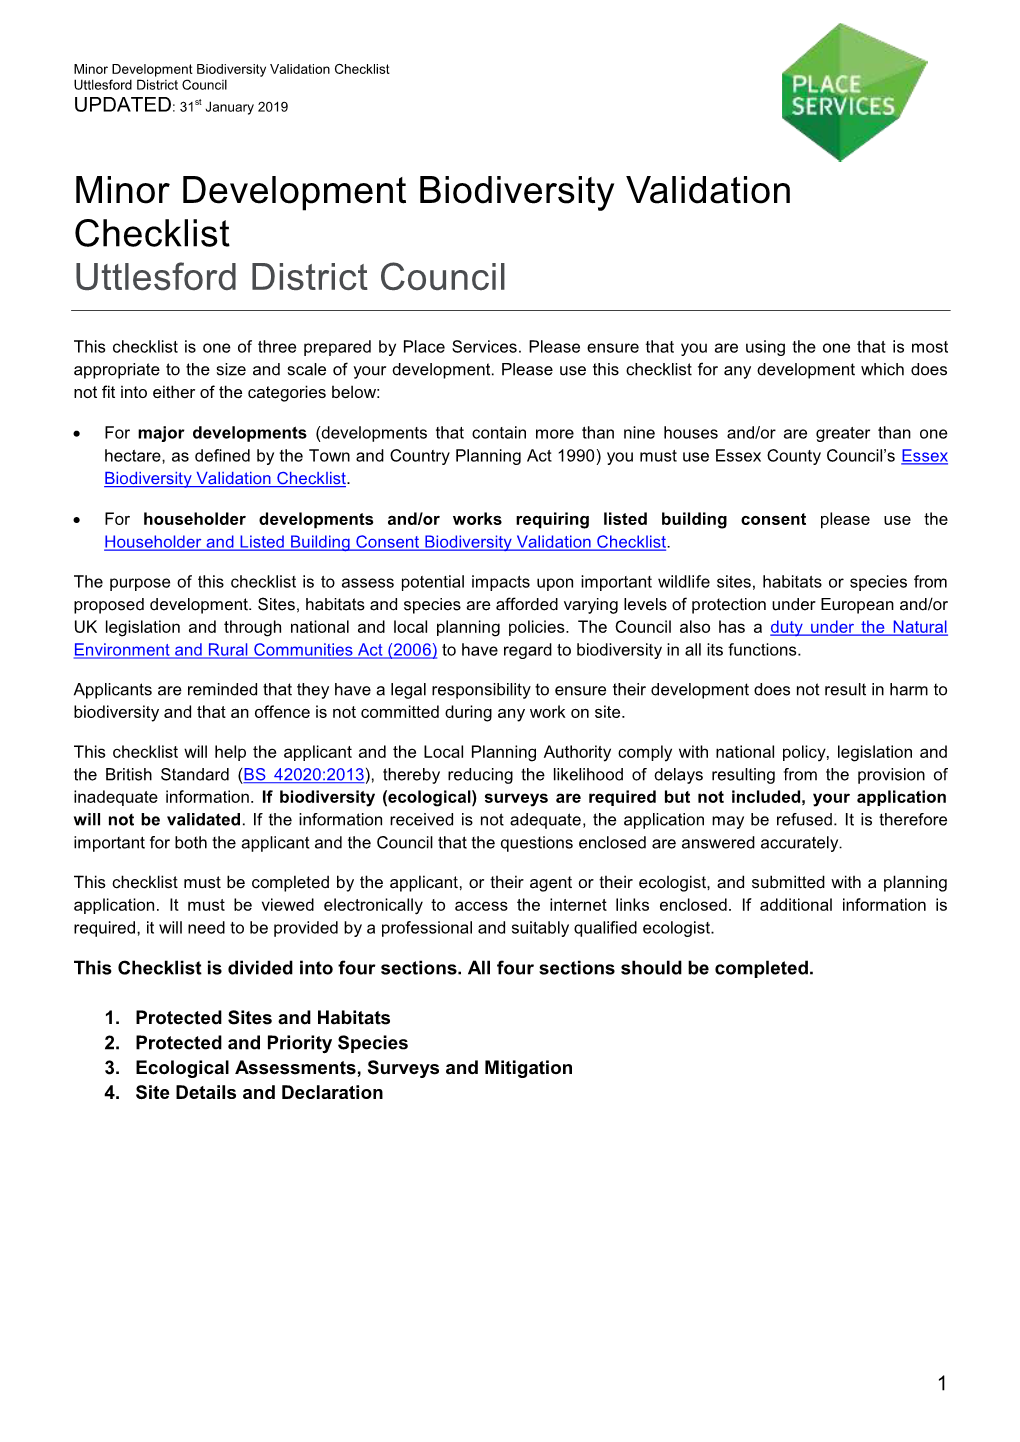 Minor Development Biodiversity Validation Checklist Uttlesford District Council UPDATED: 31St January 2019